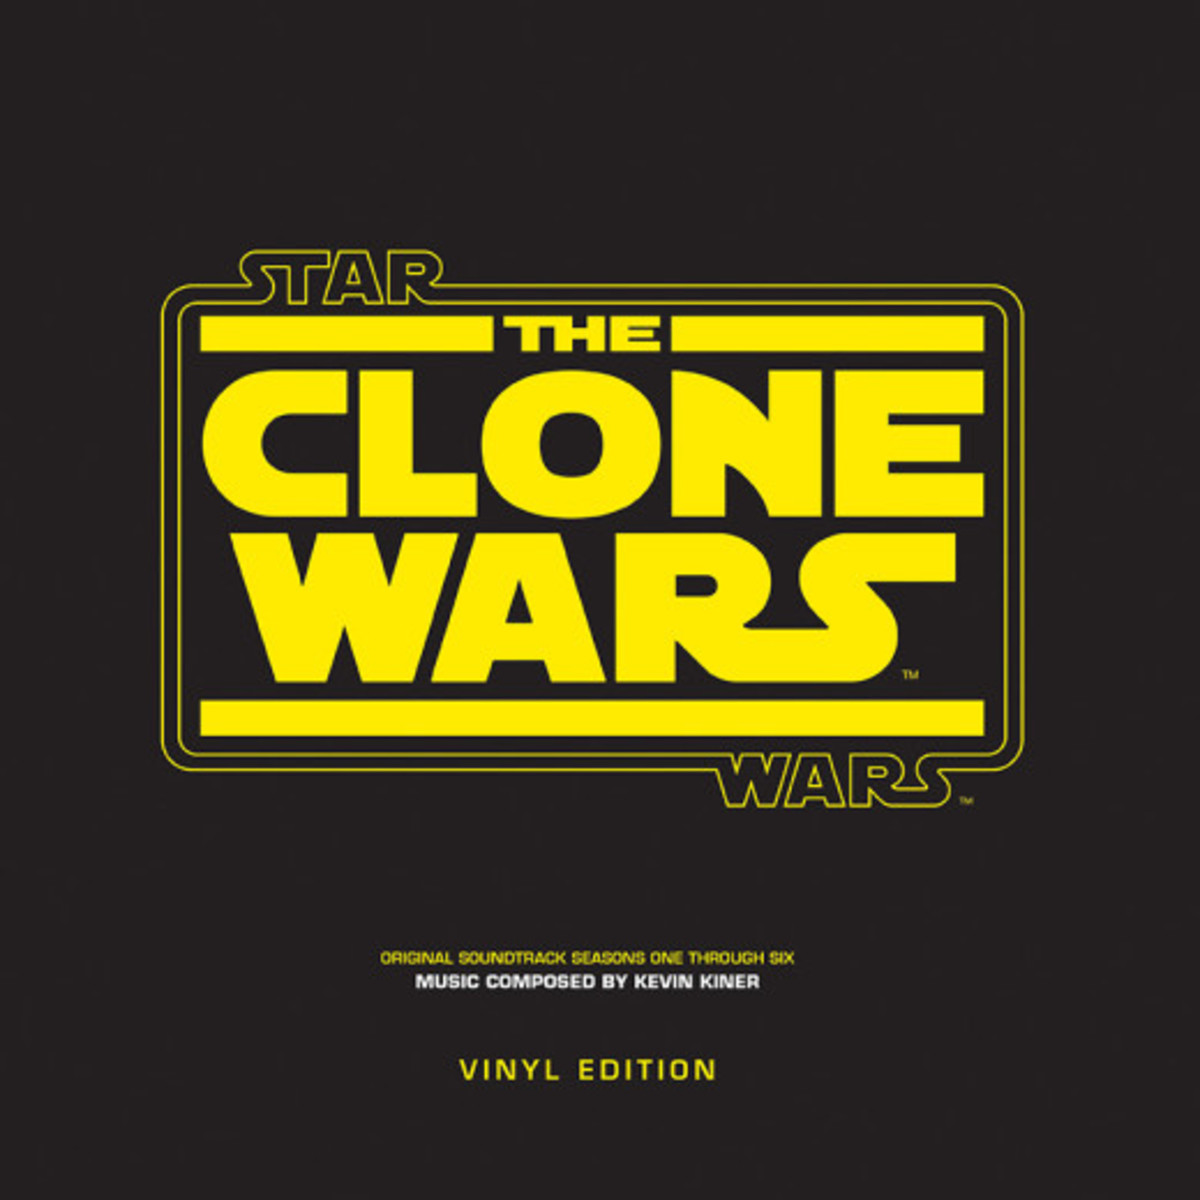 How Kevin Kiner composes “bigger than life” Star Wars soundtracks